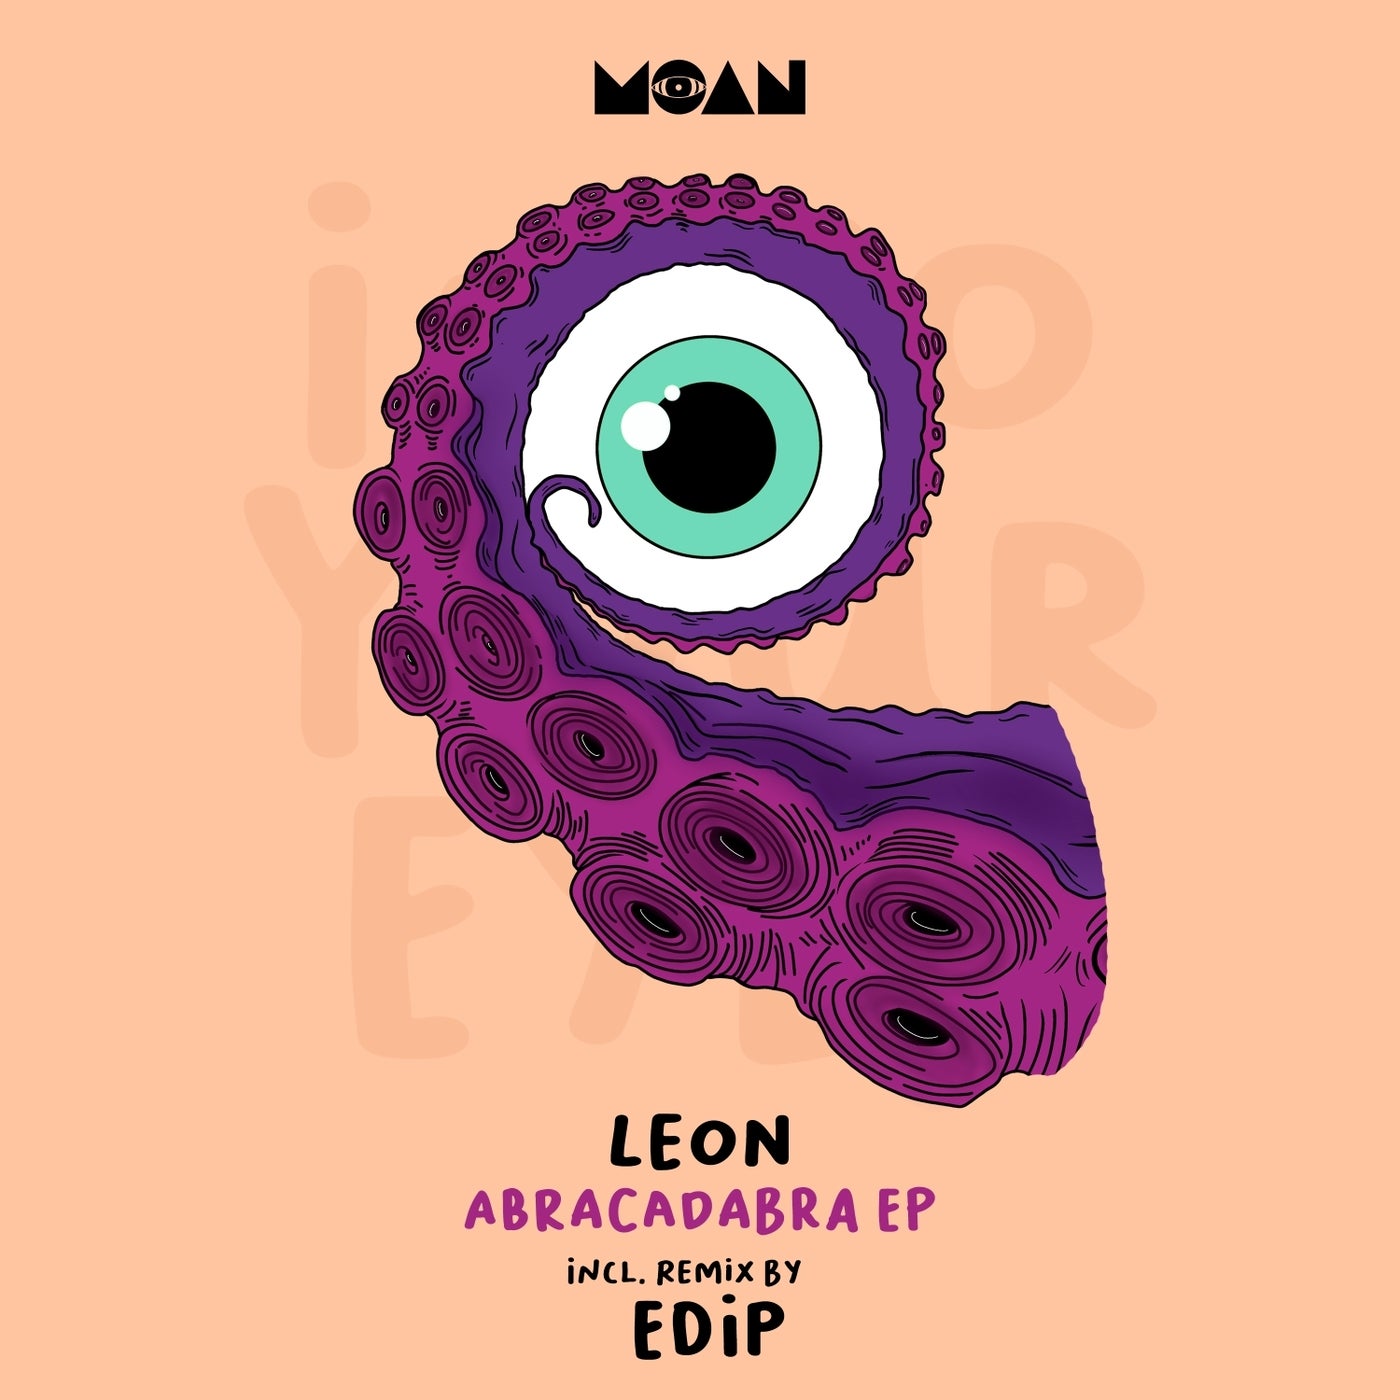 image cover: Leon (Italy) - Abracadabra EP on Moan